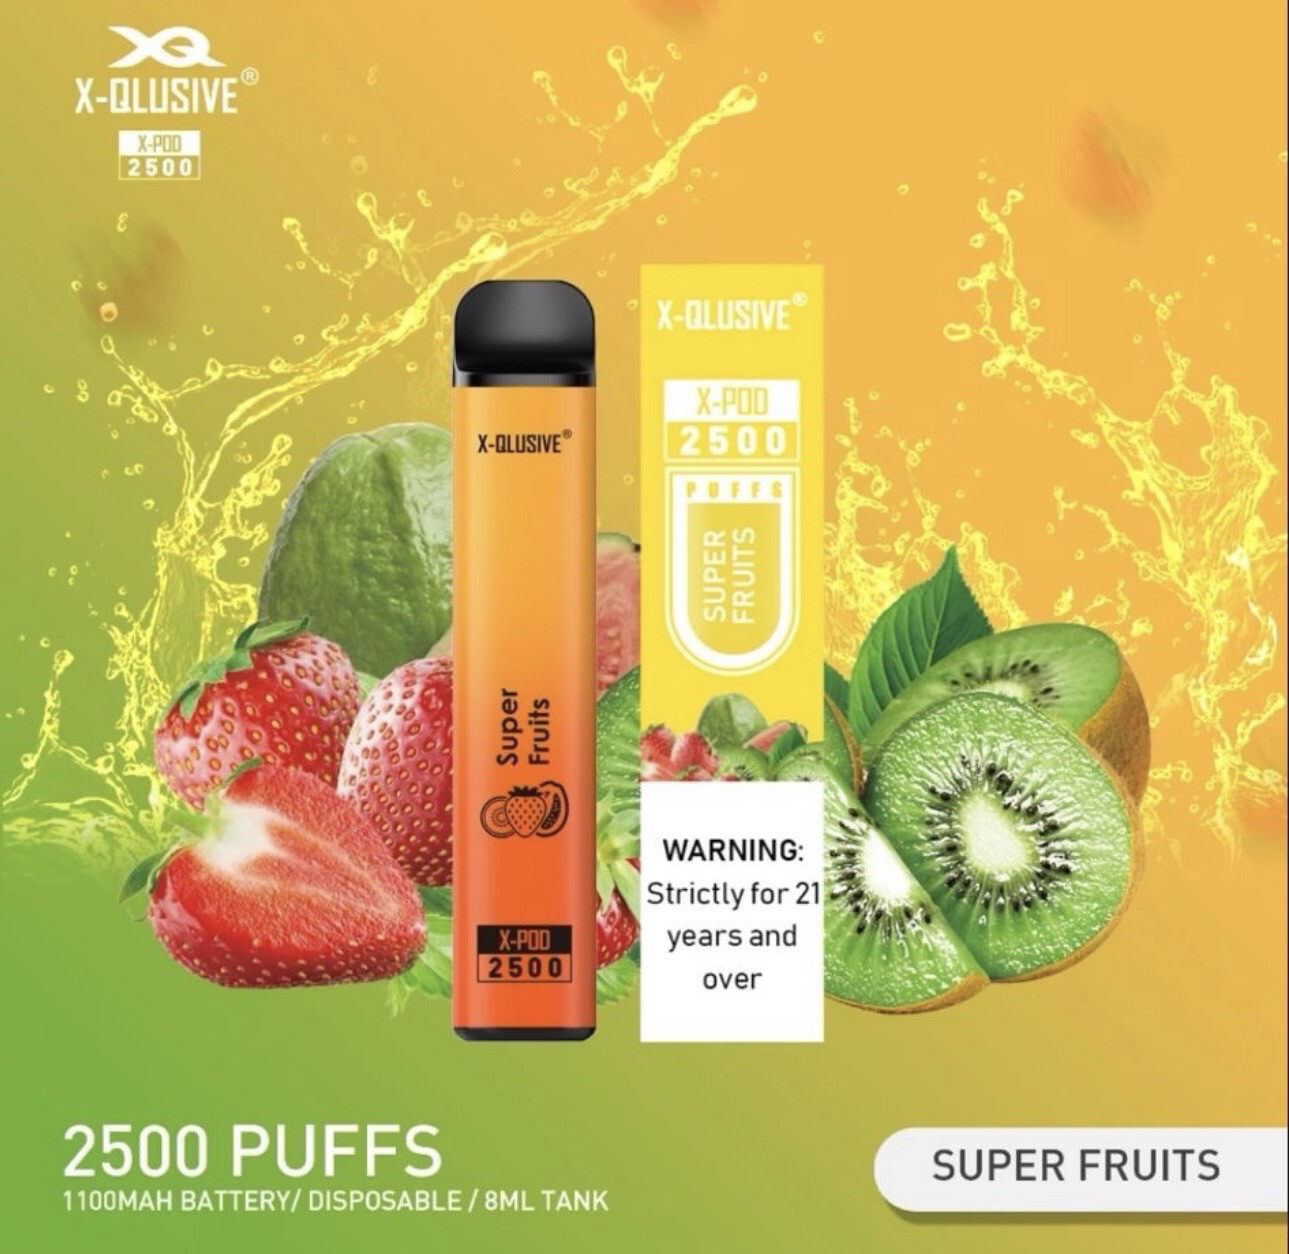 XPOD SUPER FRUITS